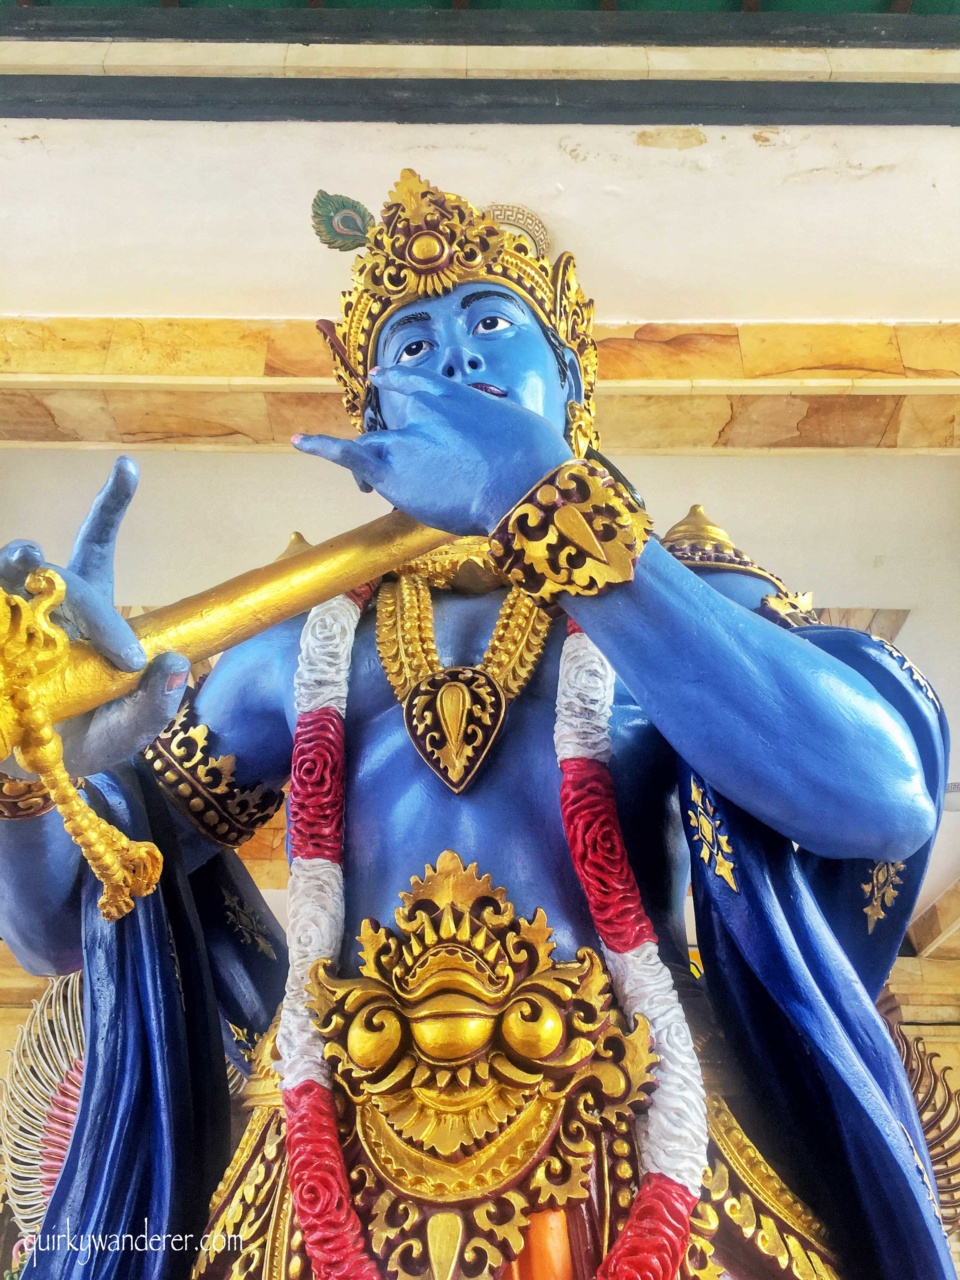 Hindu influence in Bali